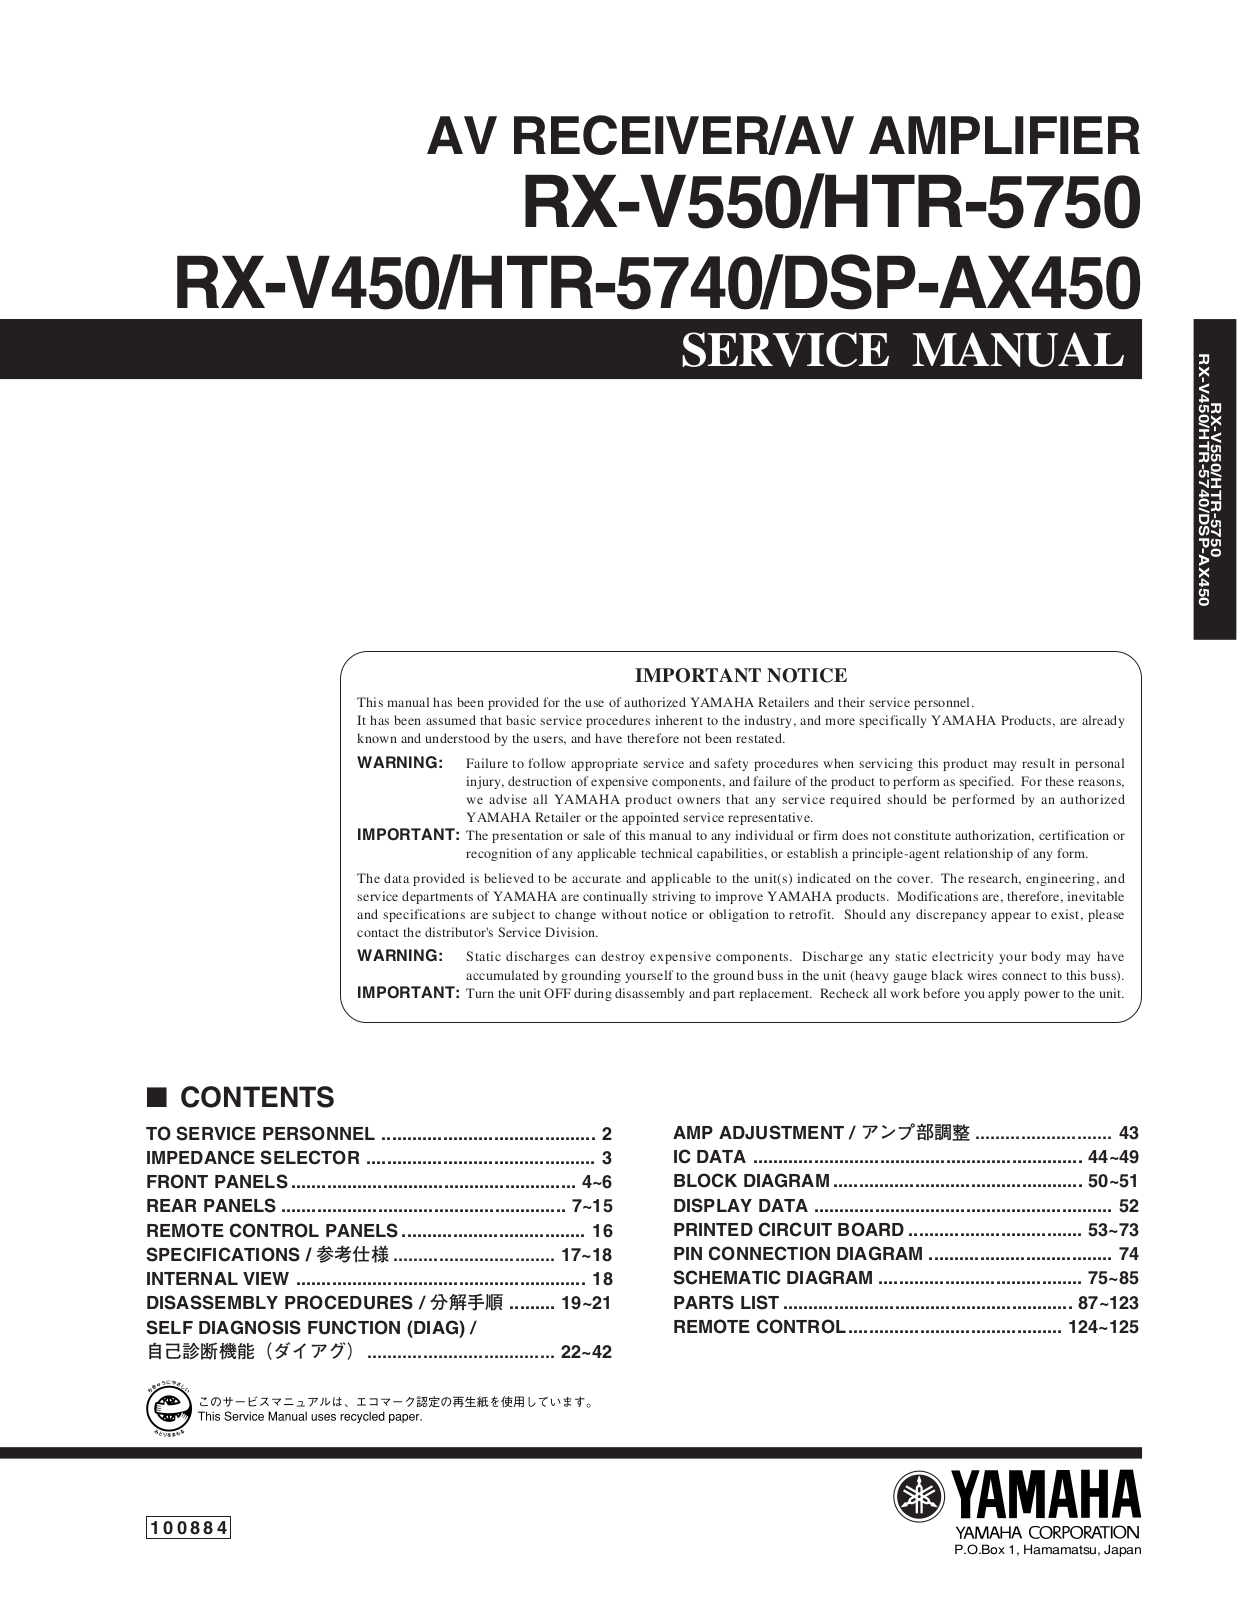 Yamaha RX-V550, HTR-5750, RX-V450, HTR-5740, DSP-AX450 Service manual